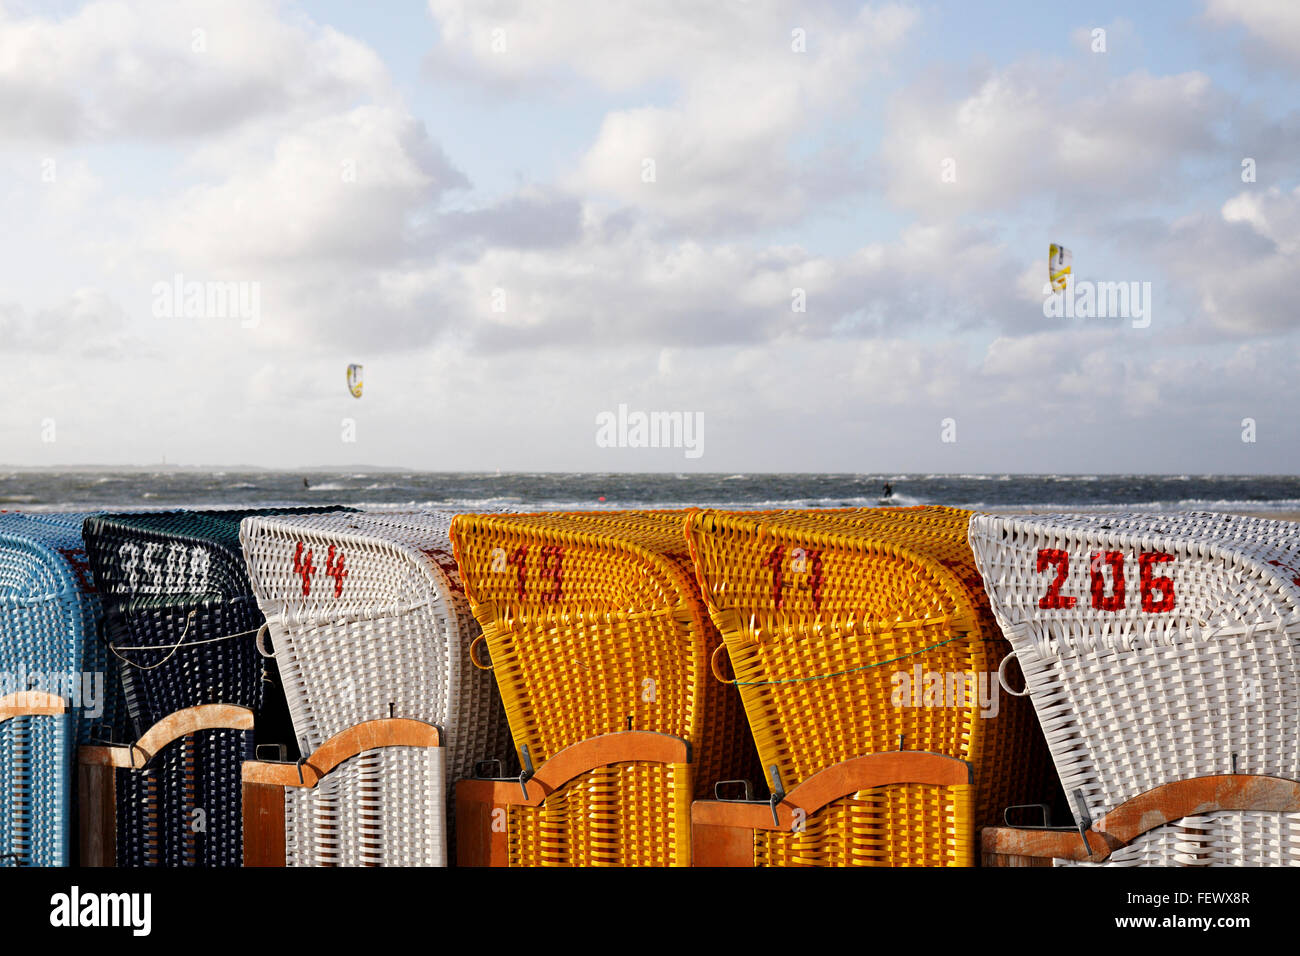 Strandkorb beach wind shelters with kite surfers, Amrum, Germany Stock Photo